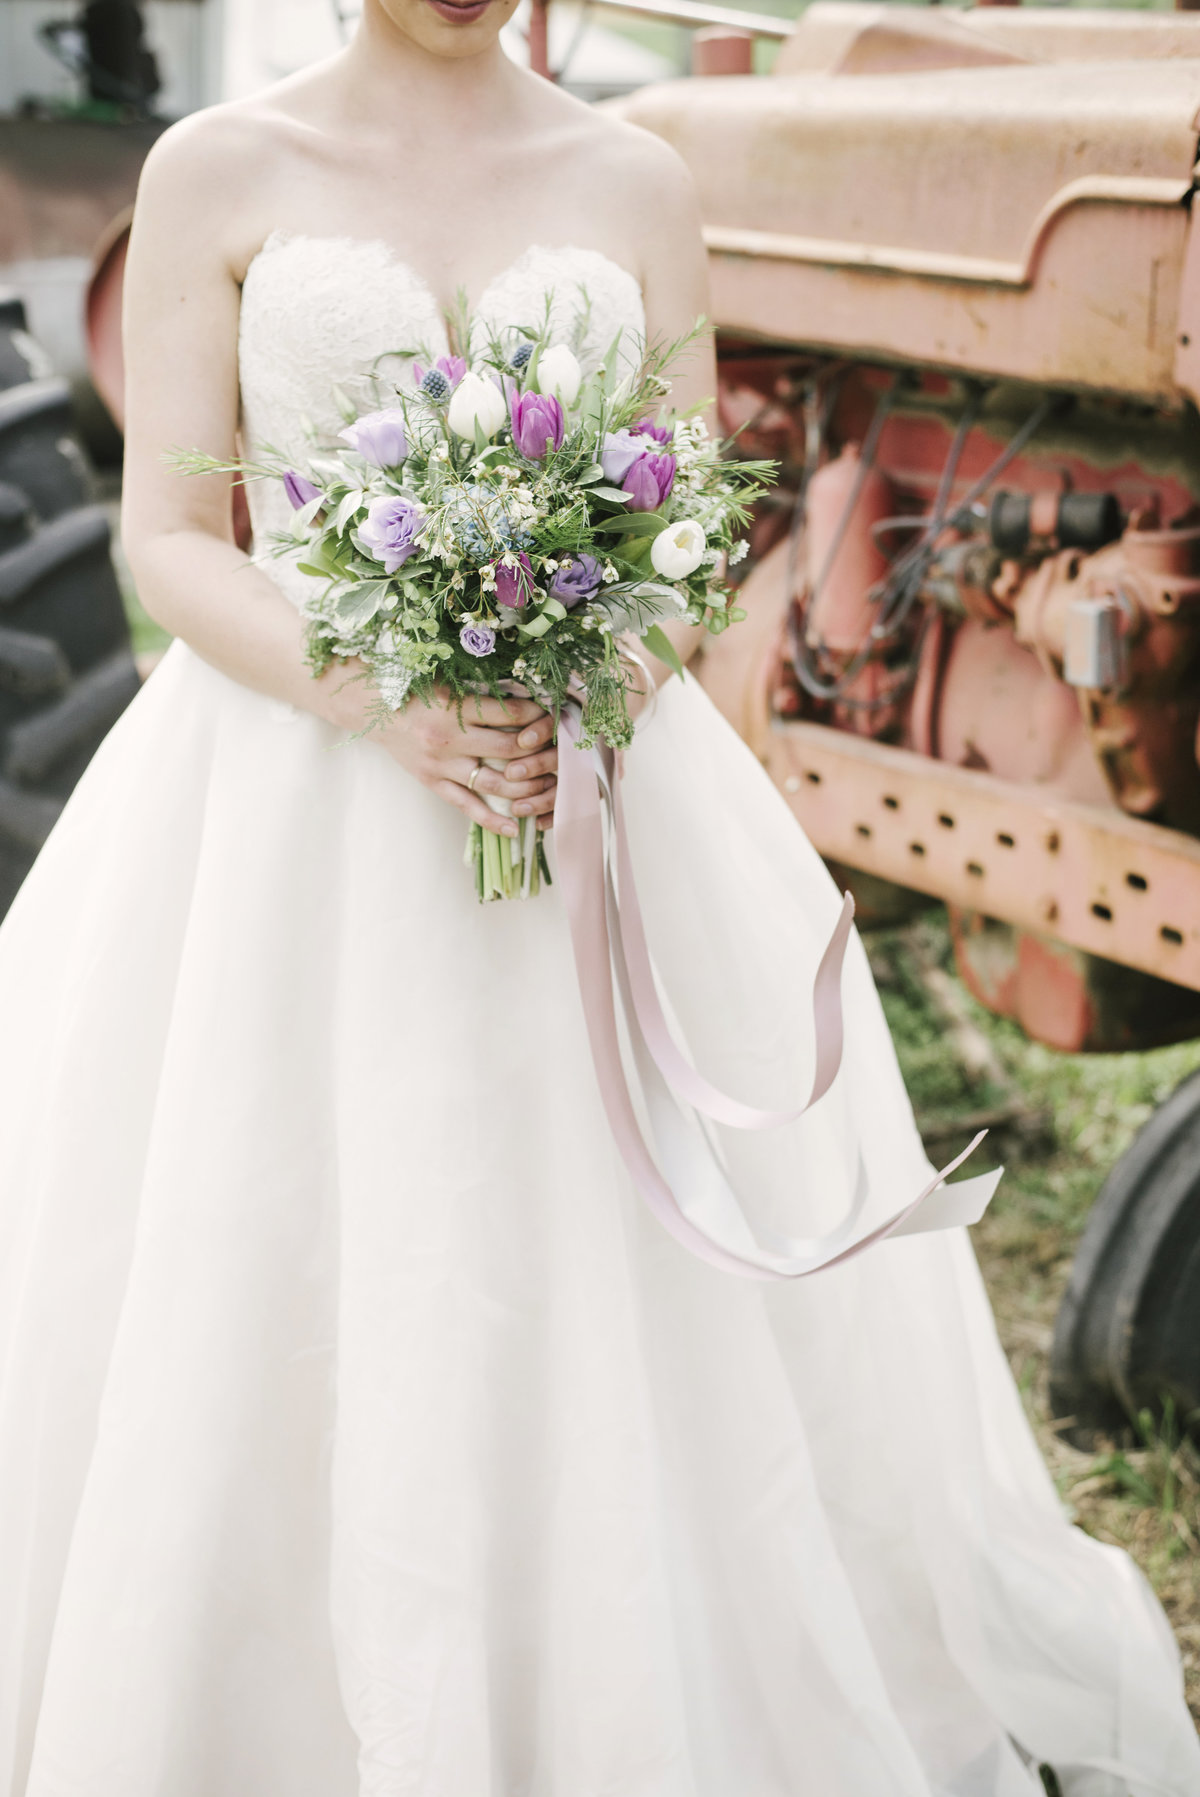 Monica-Relyea-Events-Alicia-King-Photography-Globe-Hill-Ronnybrook-Farm-Hudson-Valley-wedding-shoot-inspiration39